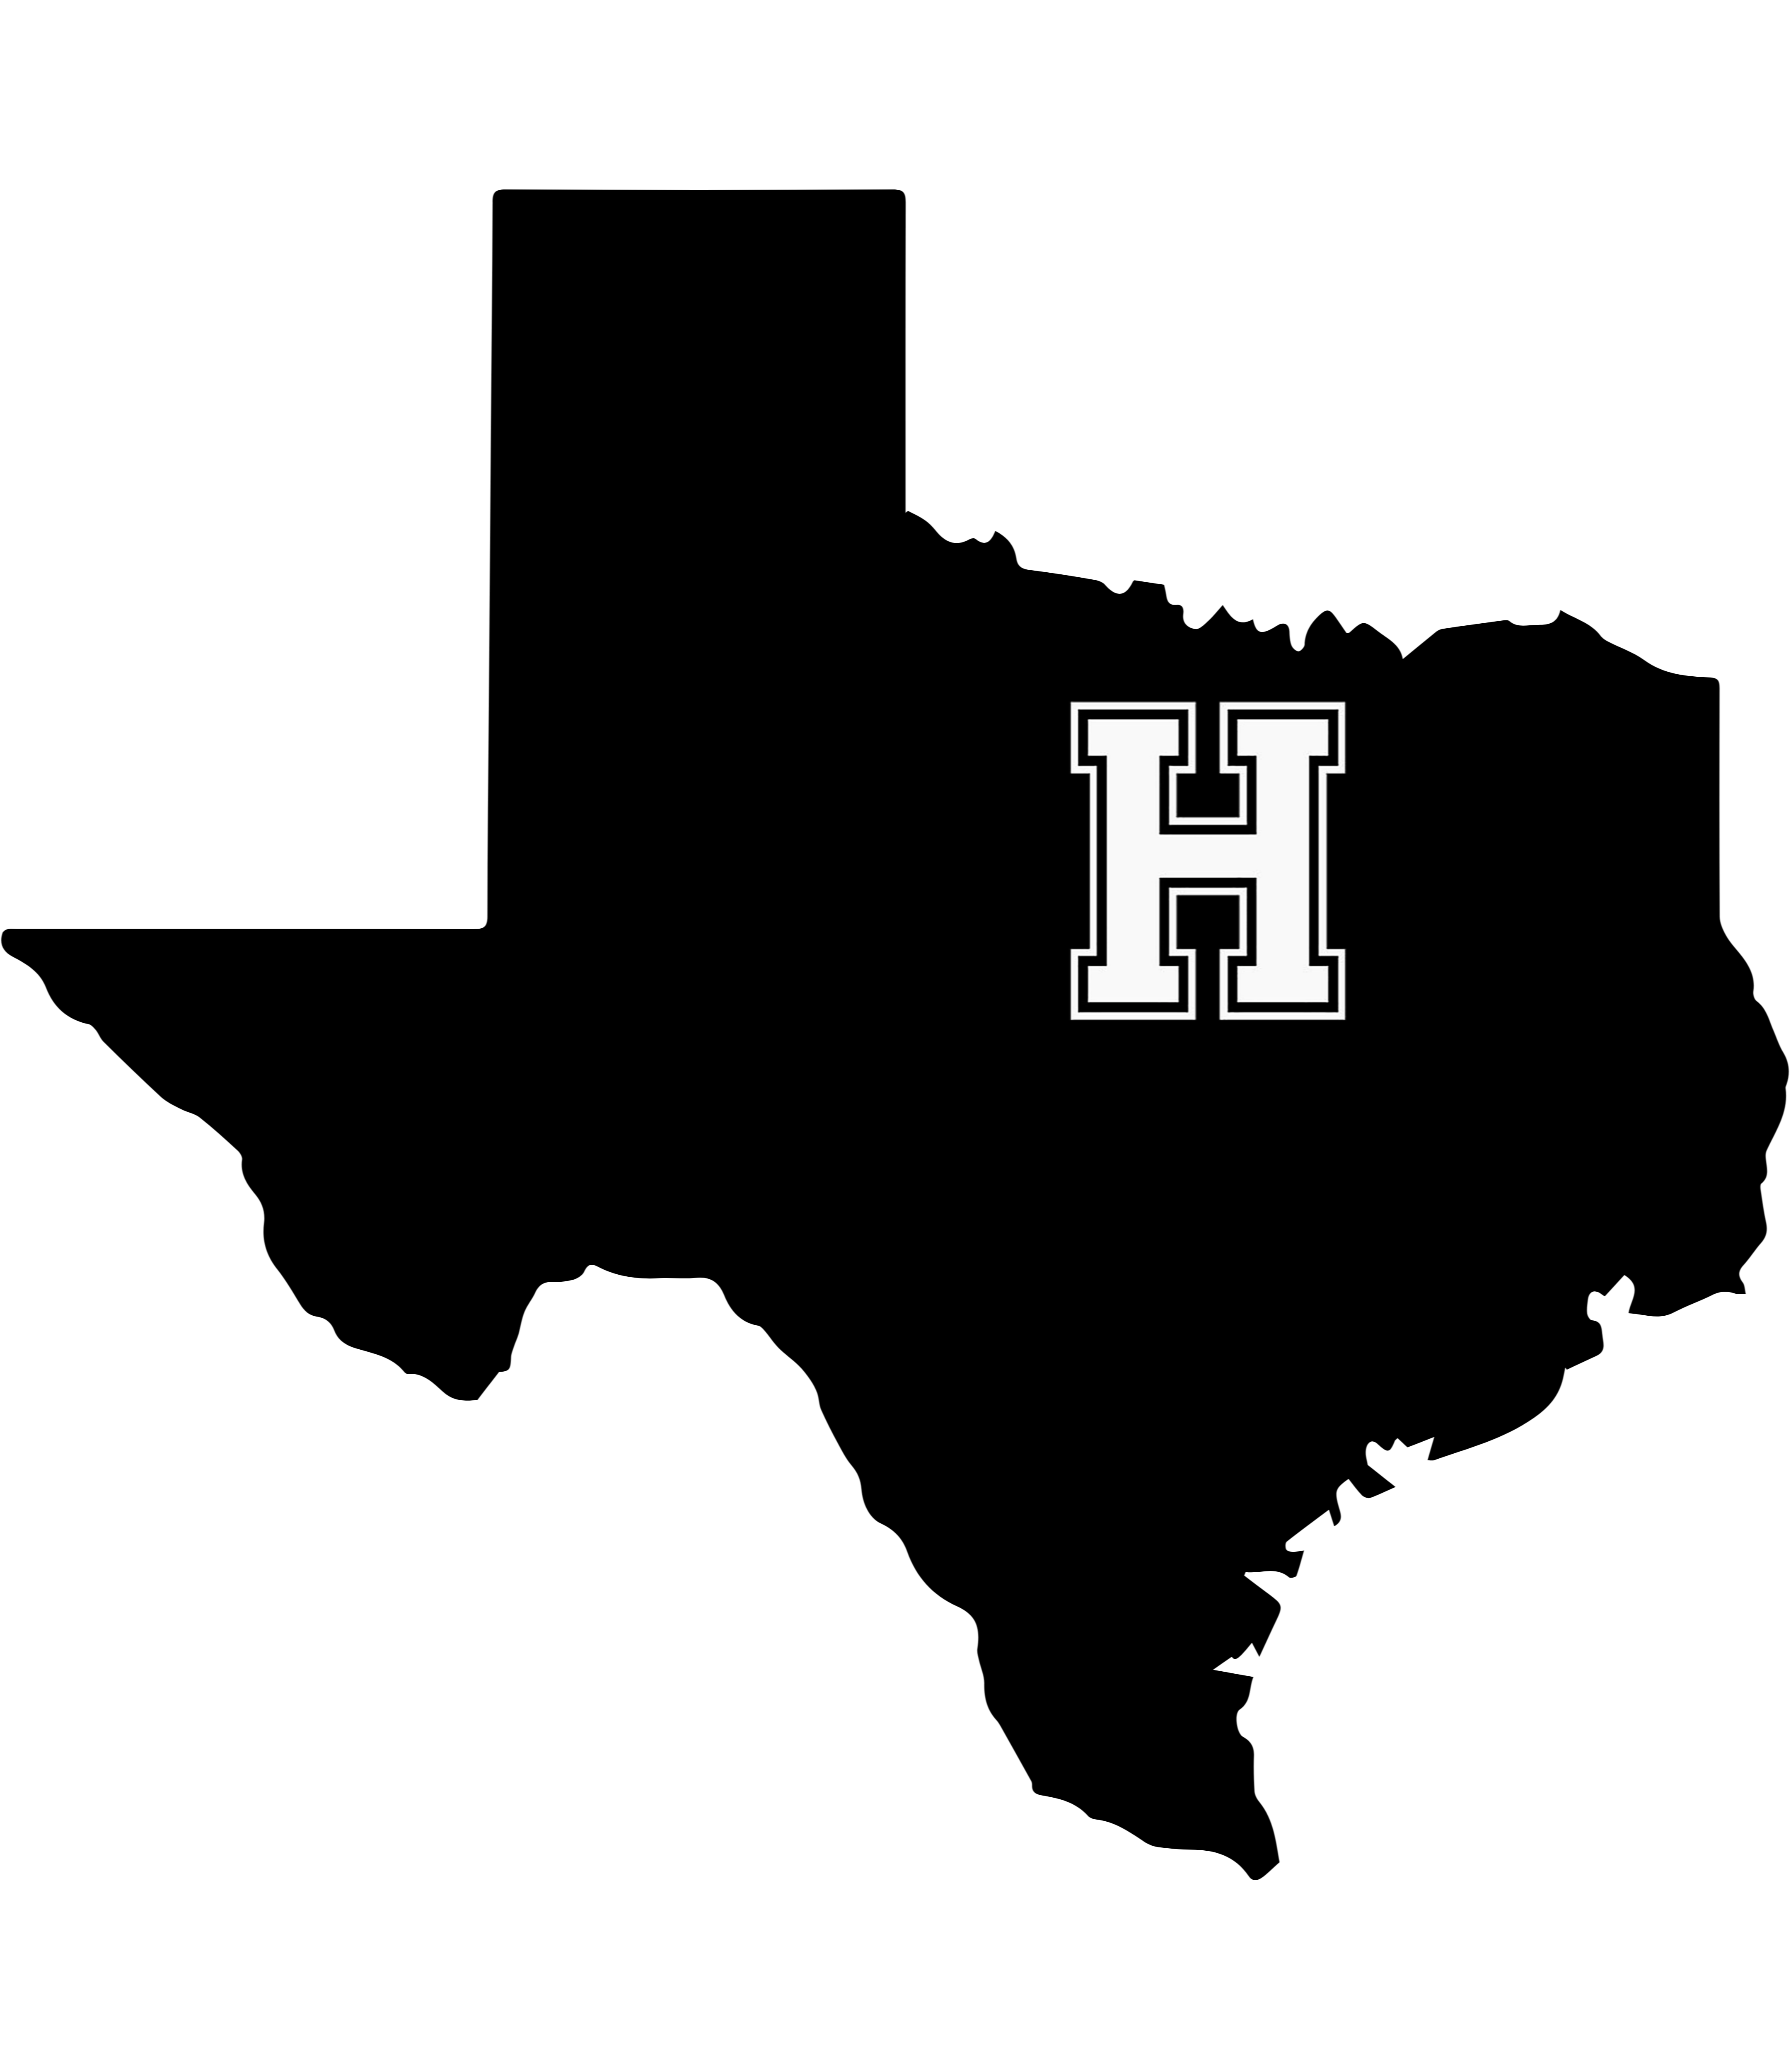 howe isd texas logo